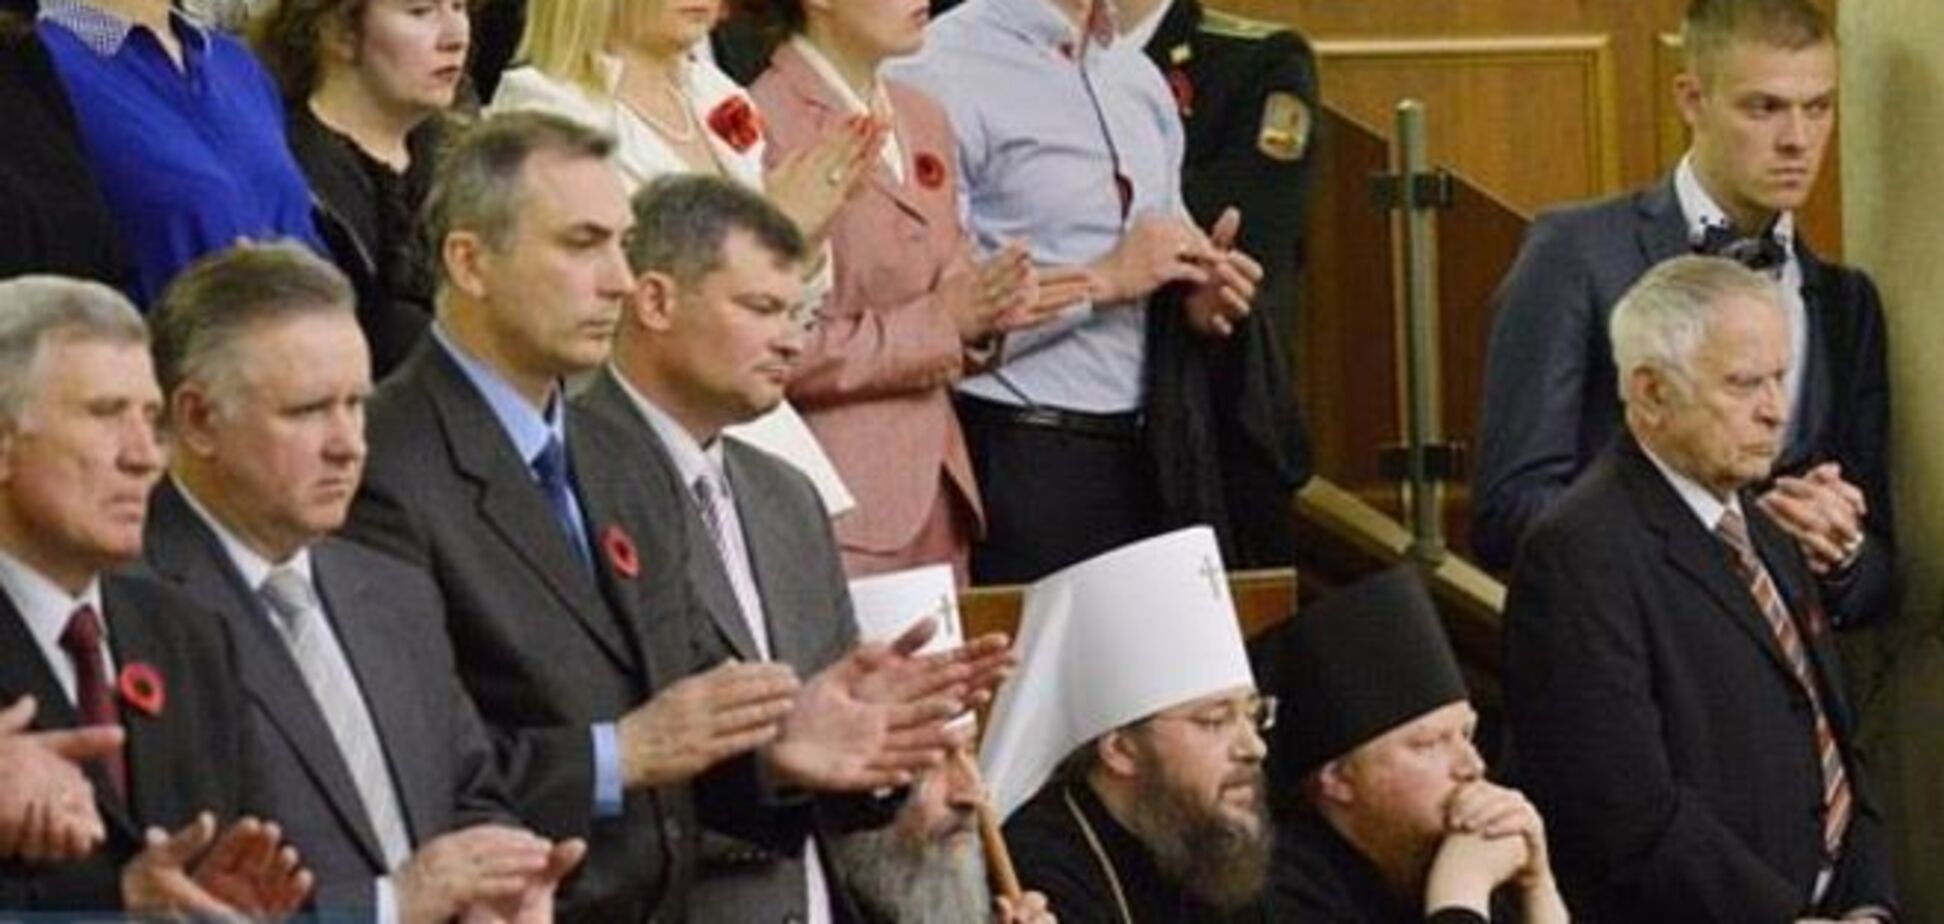 Московський патріархат в Україні, люди церкви - просто сидять...